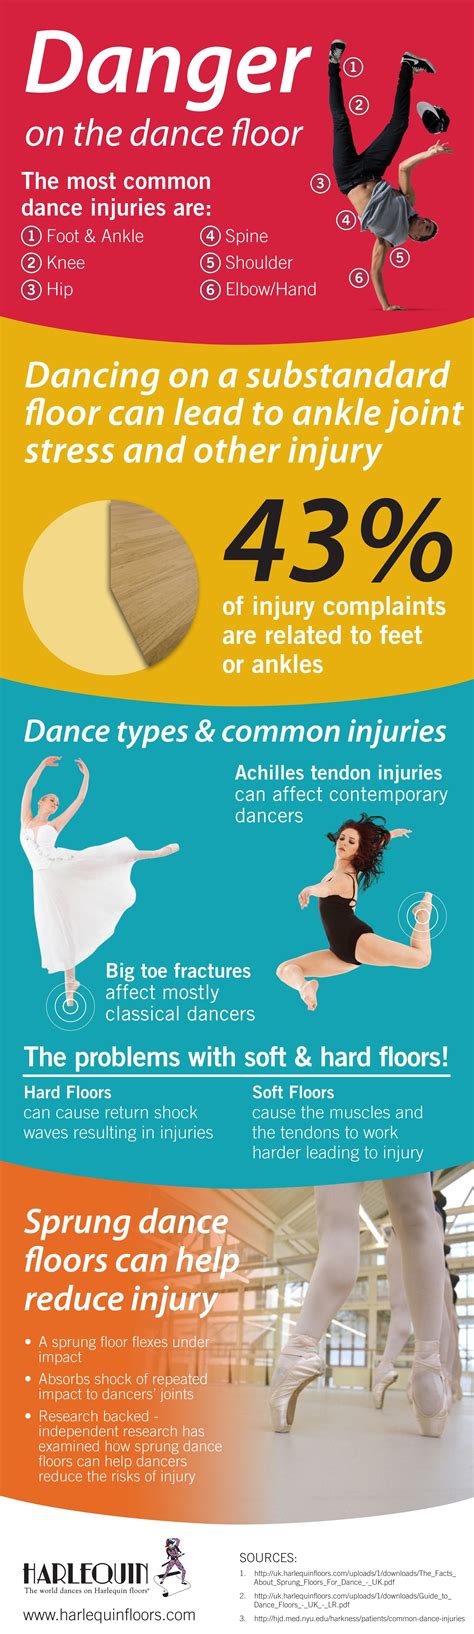 danger on the dance floor [infographic] infographic health infographic dance